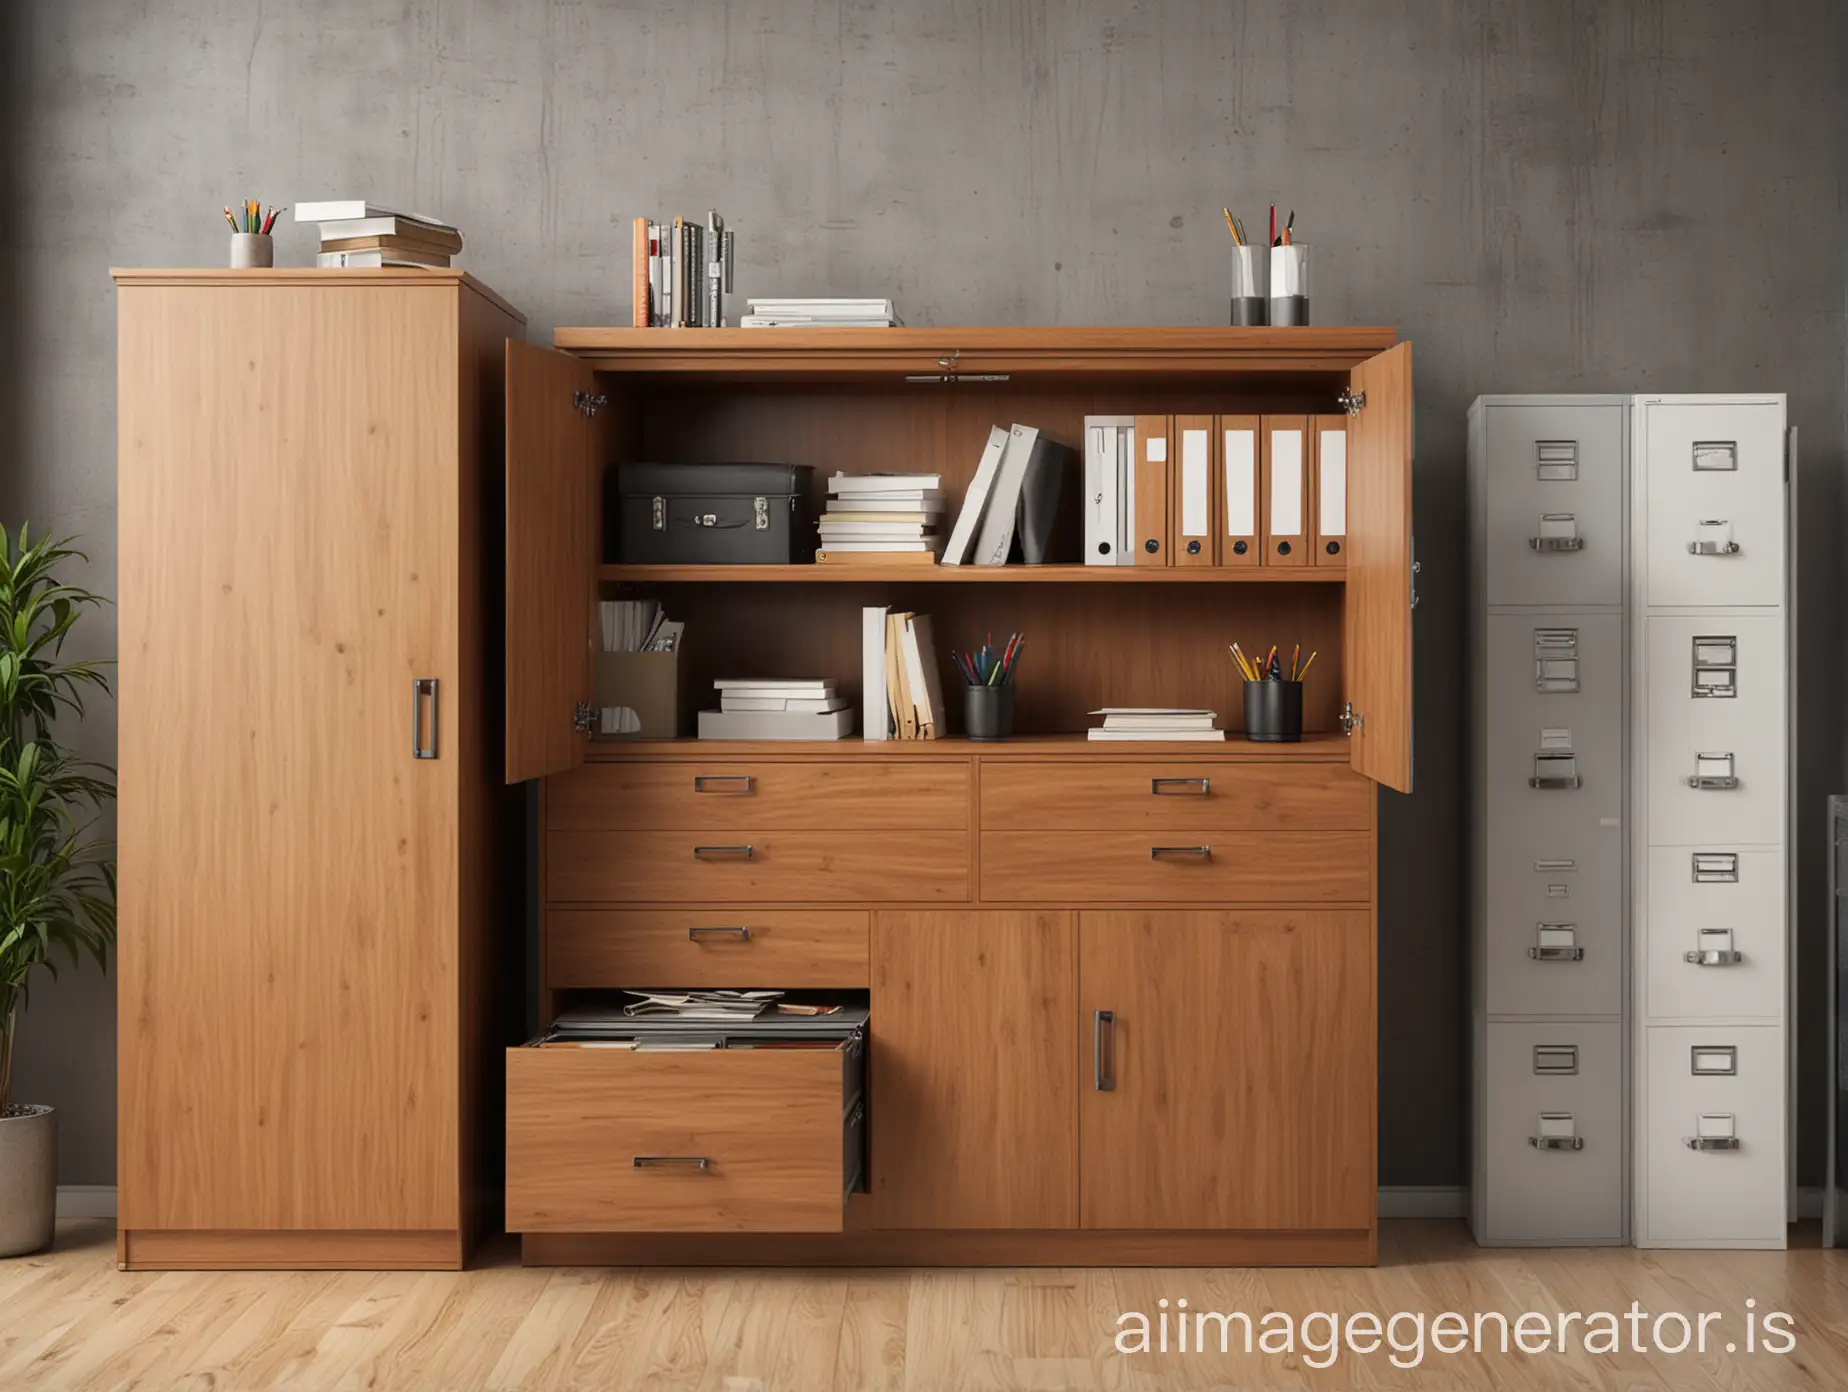 Modern-Office-Interior-with-Stylish-Storage-Cabinet